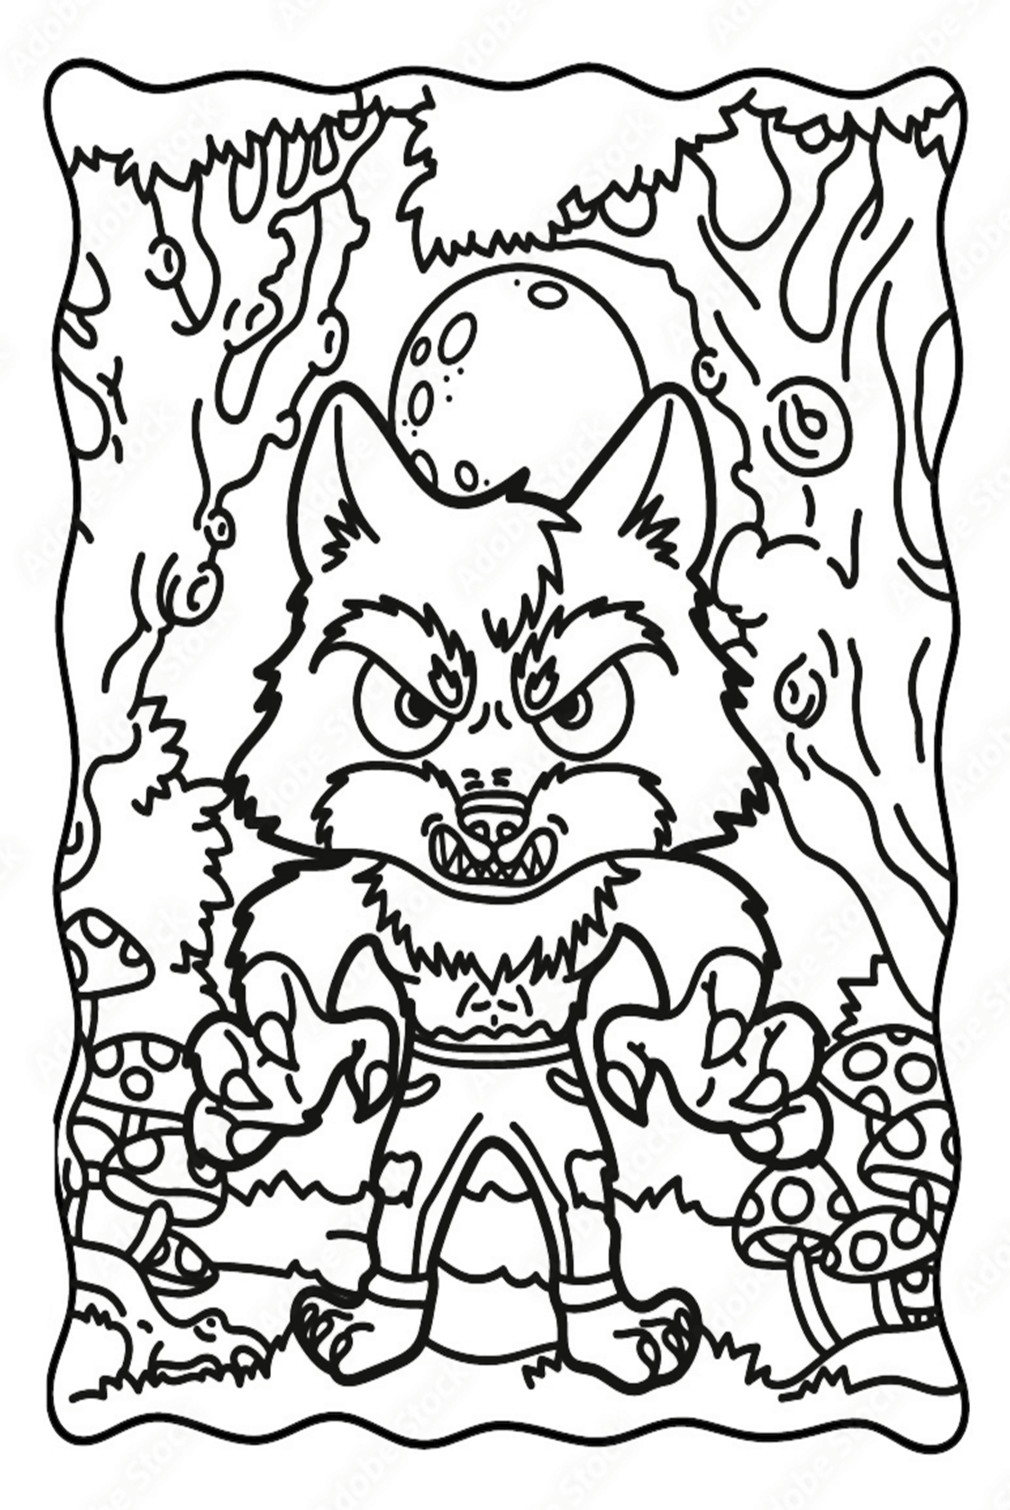 Cartoon Werewolf Coloring Page from Werewolf